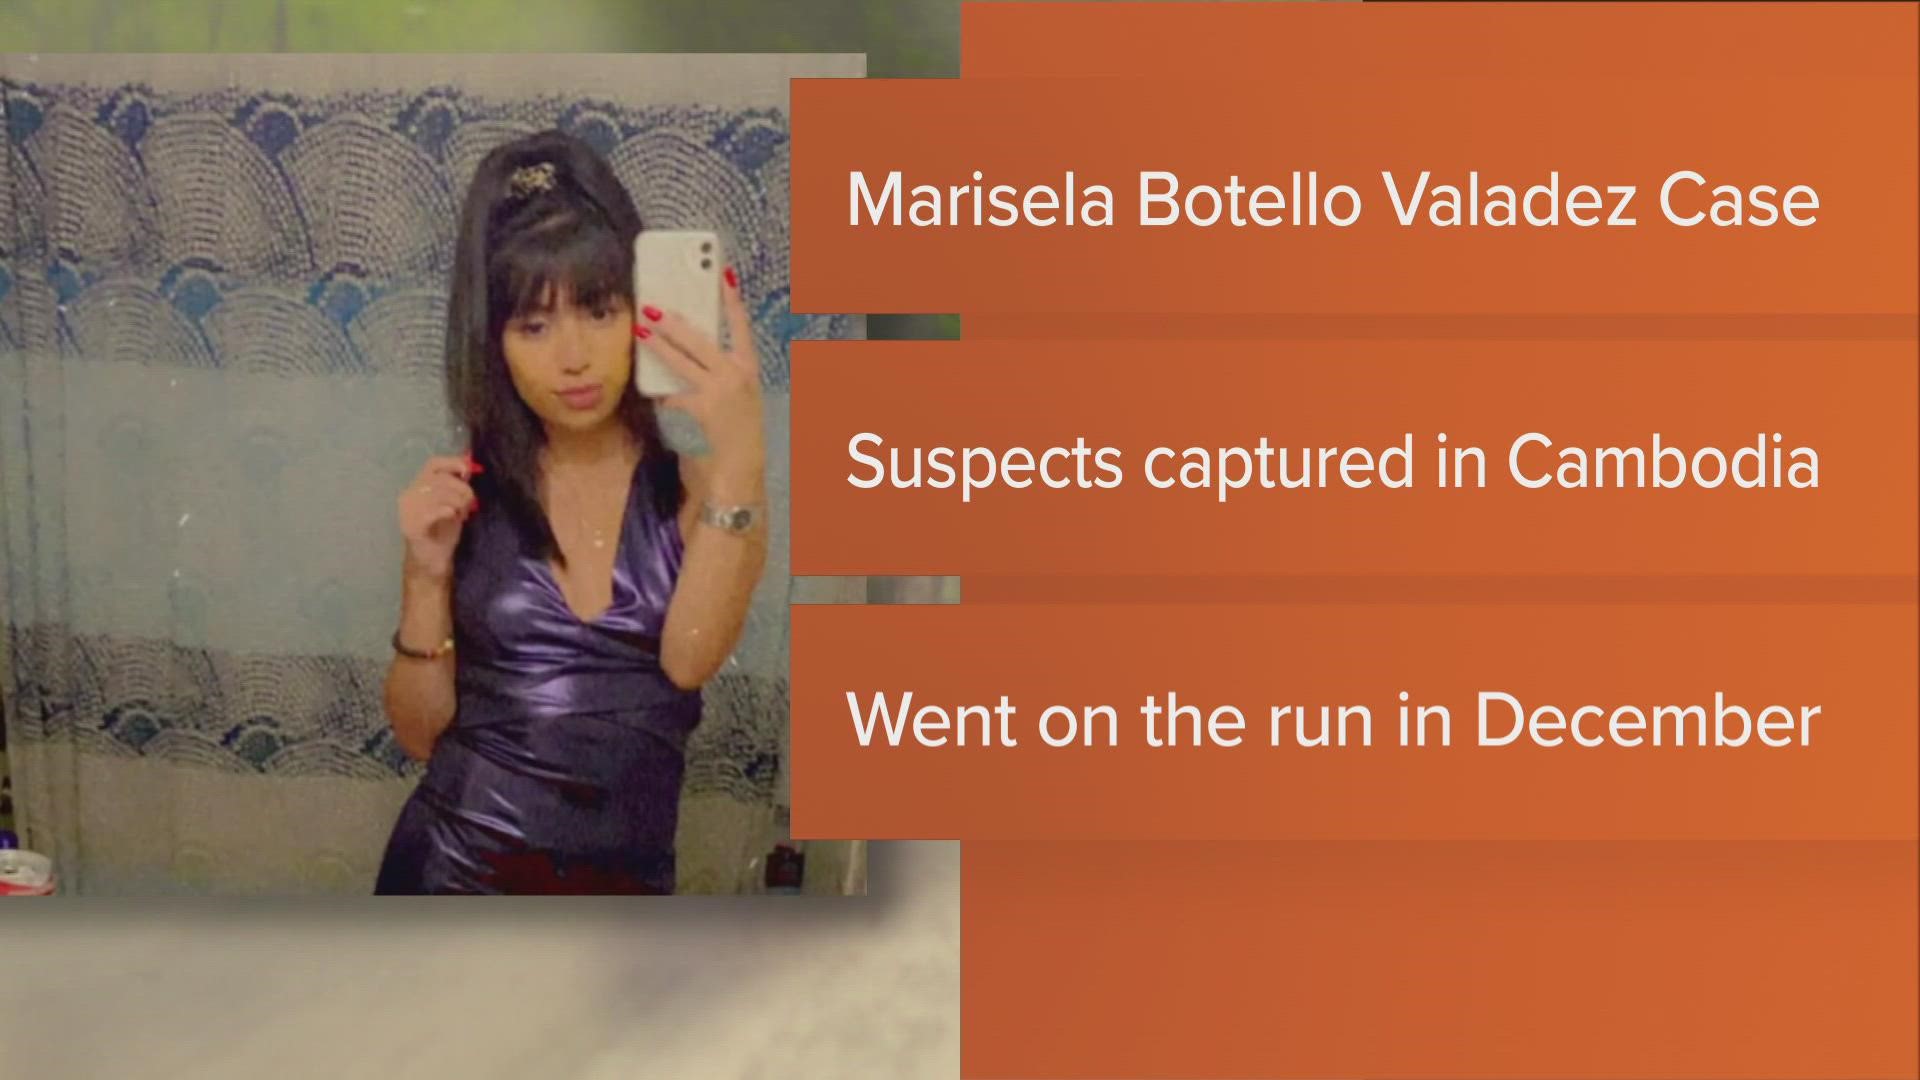 The two women, Lisa Dykes and Nina Marano, are accused of fatally stabbing Marisela Botello-Valadez, 23, while she was visiting Dallas.